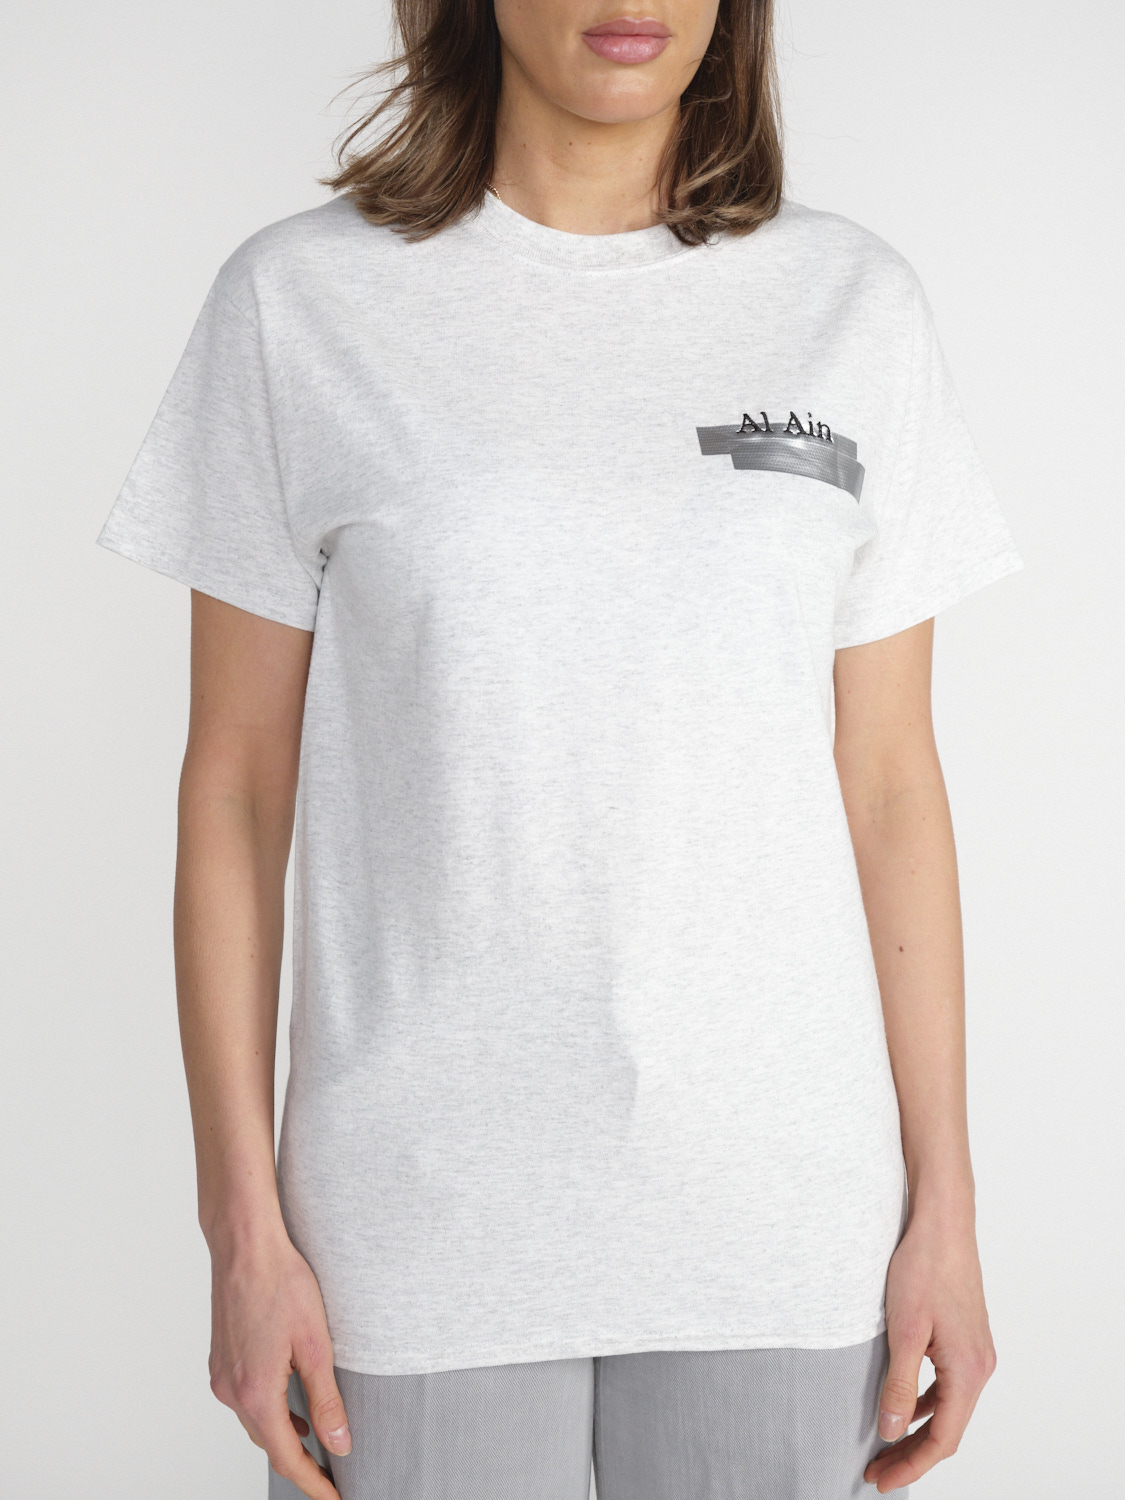 Al Ain T-Shirt mit Muster  gris XS/S